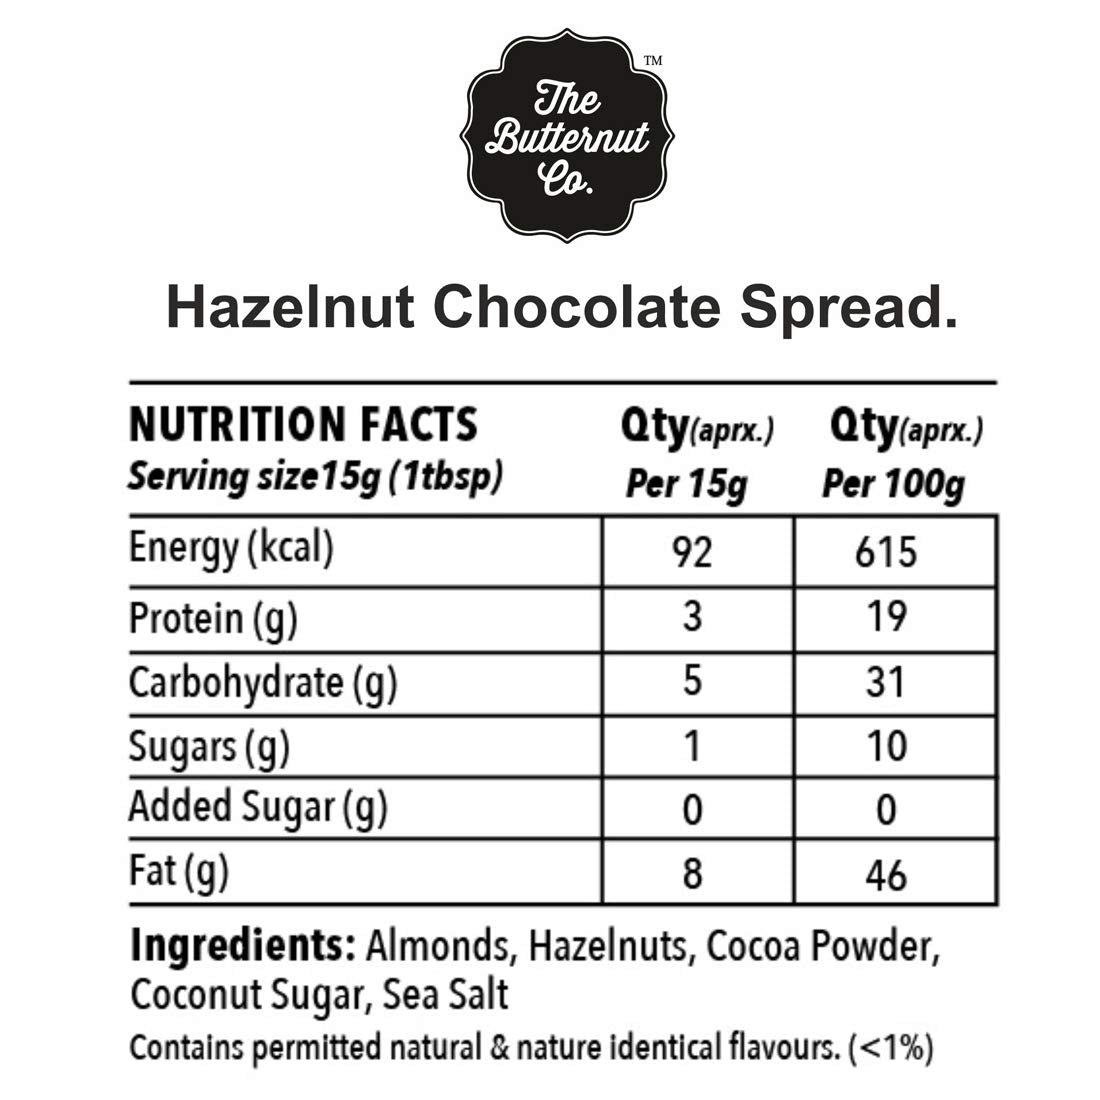 The Butternut Co. Chocolate Hazelnut Spread